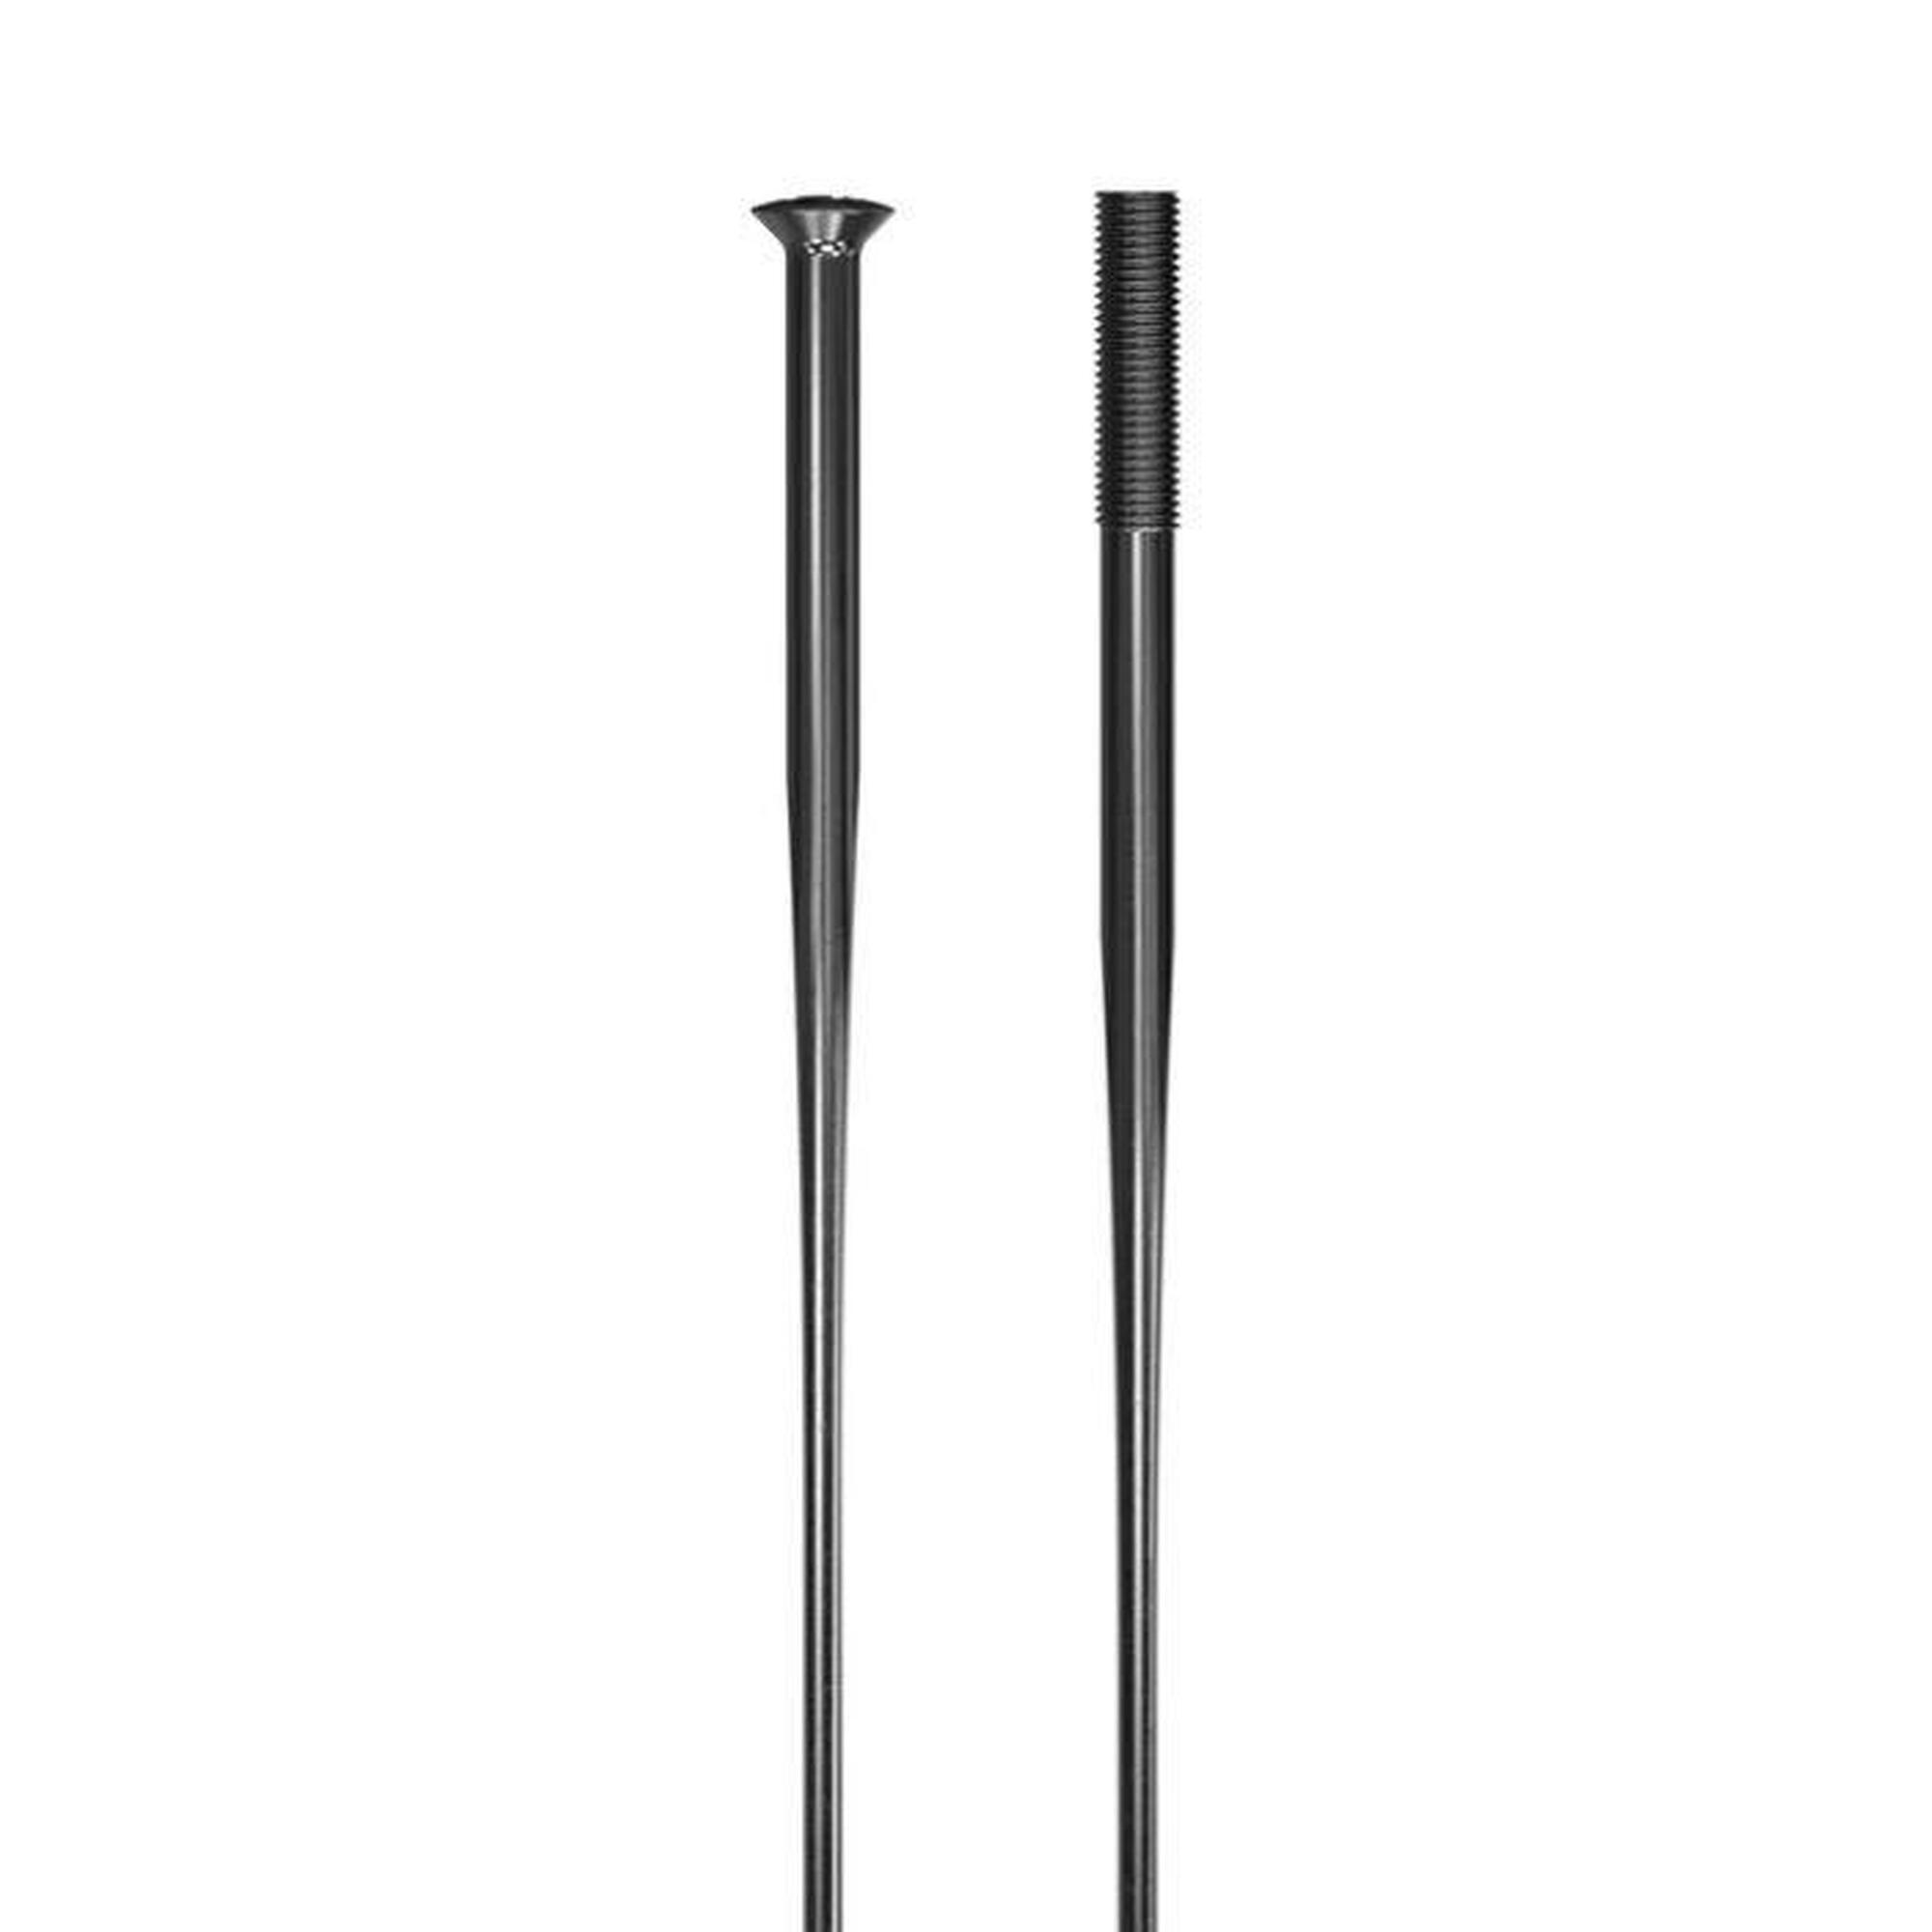 Aerocomp straightpull spokes black 272mm 2,0/2,3x1.25mm 1 pcs